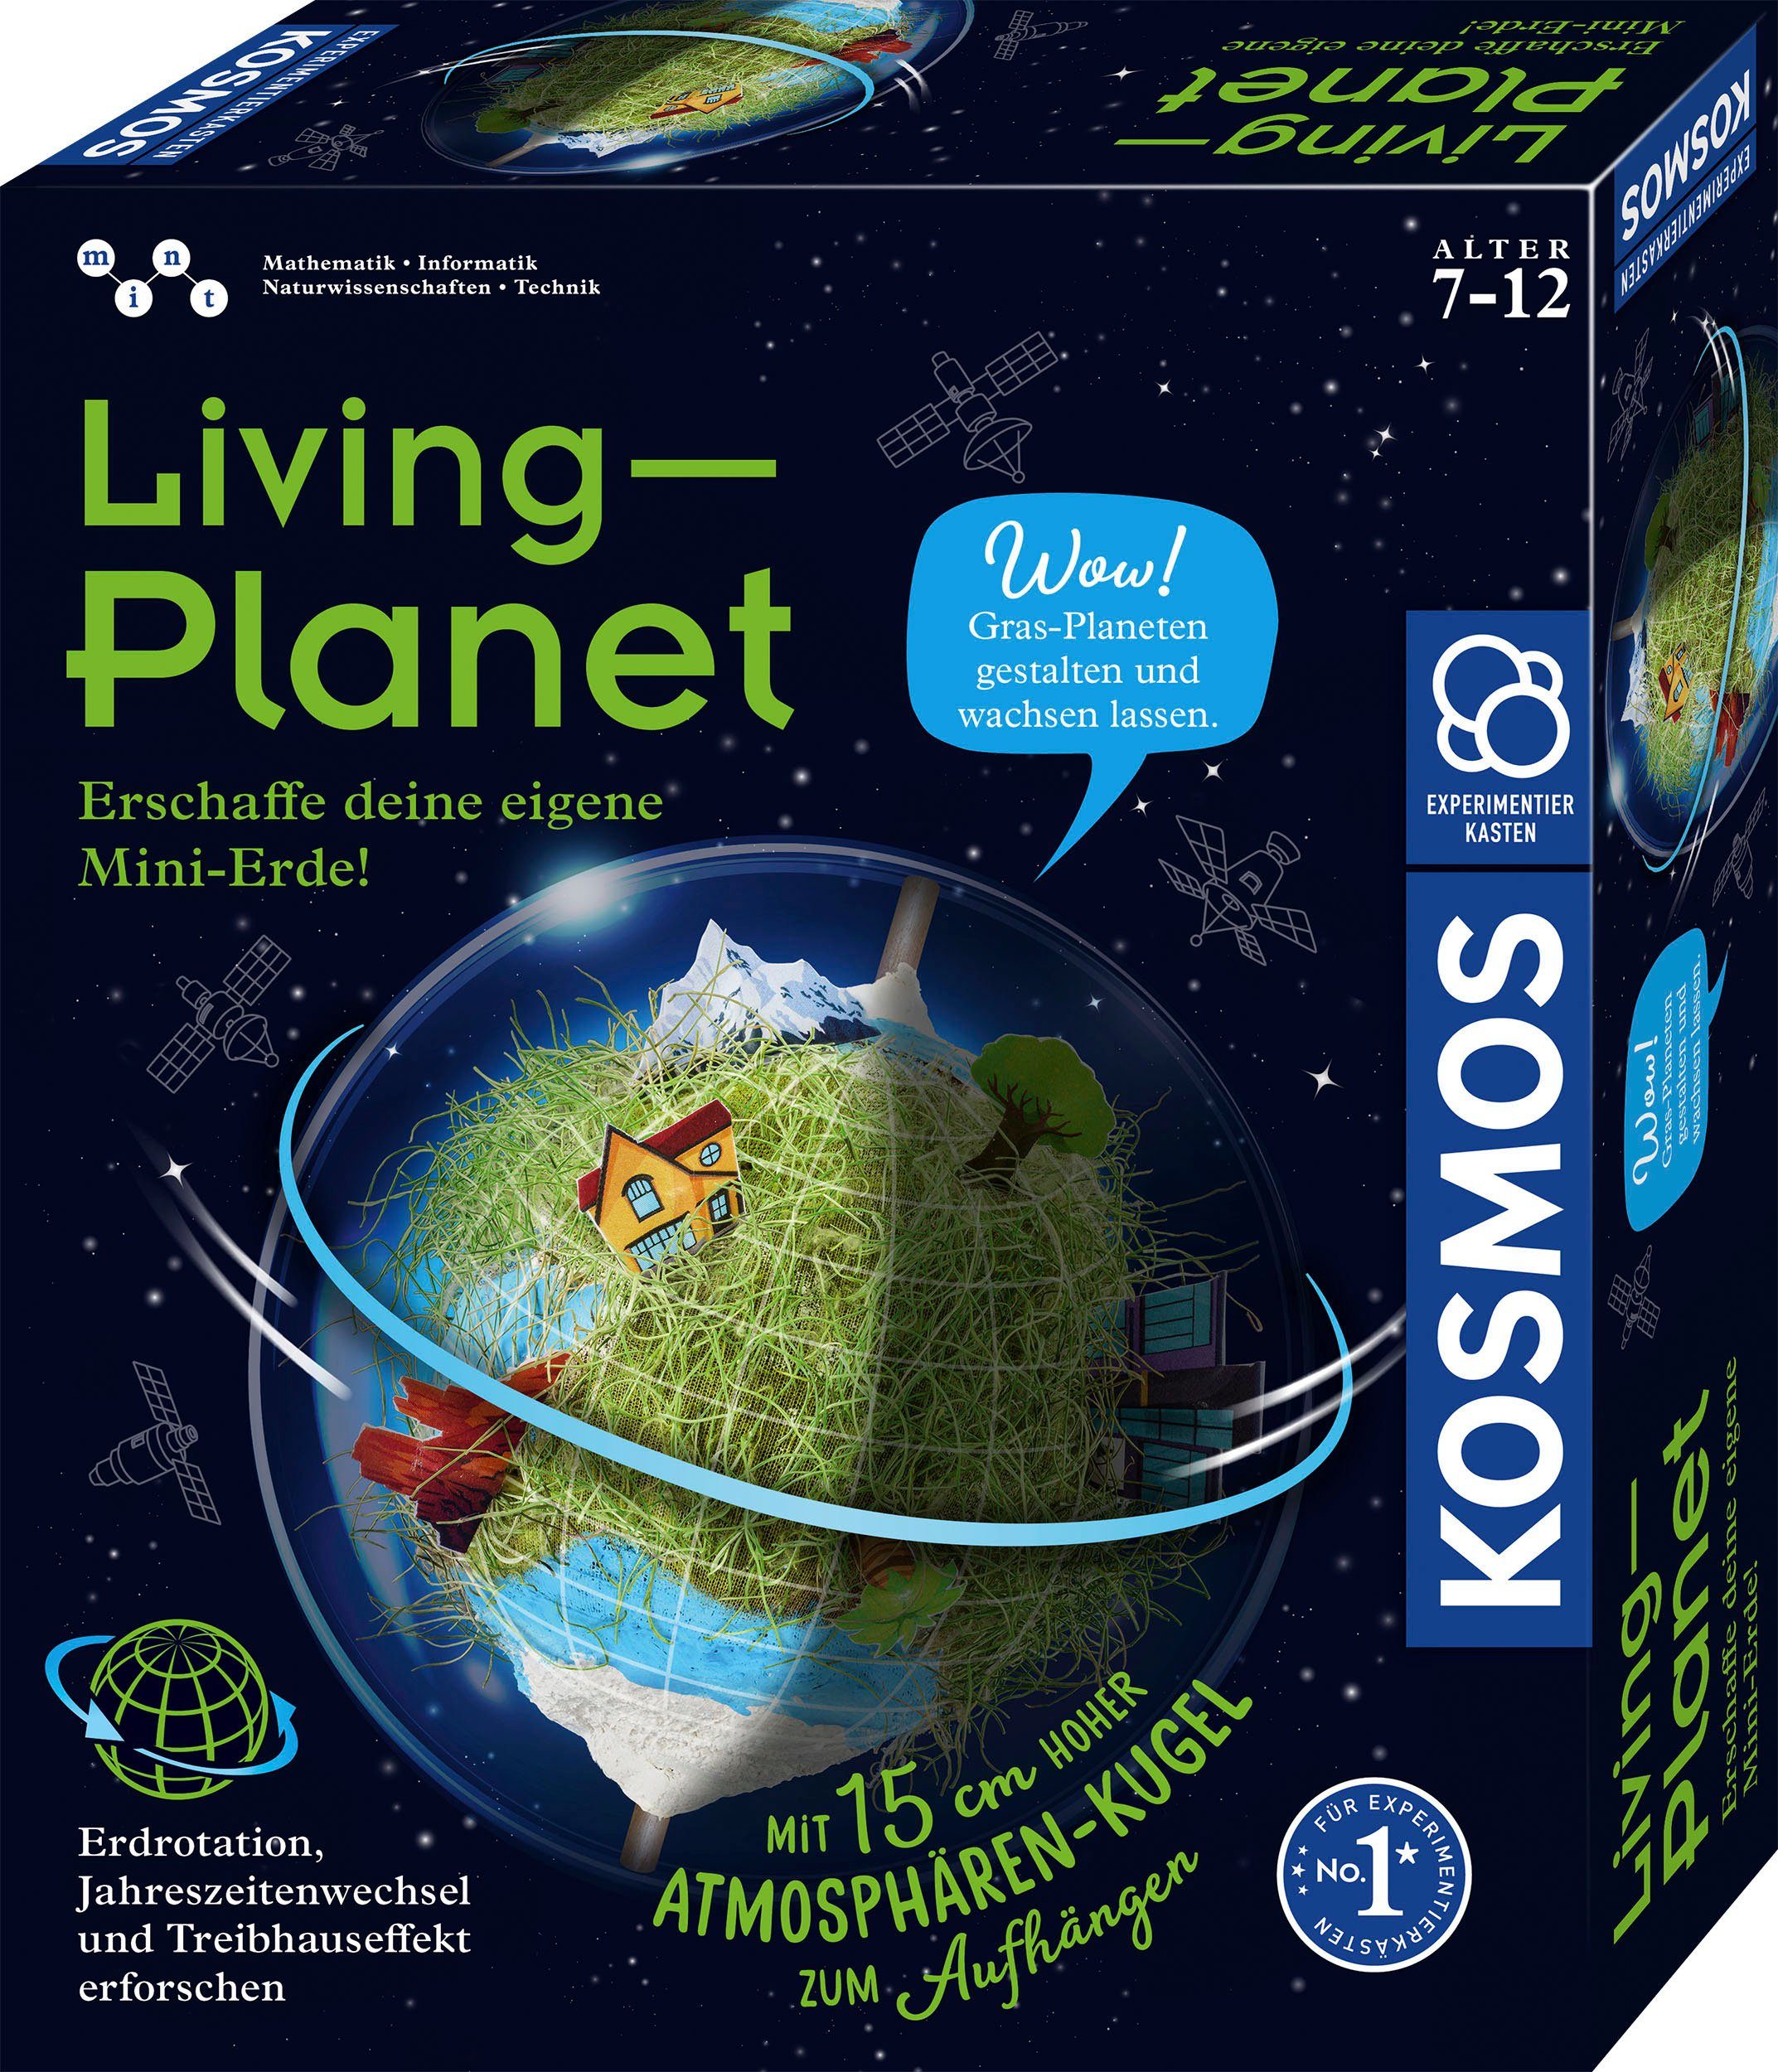 Living Kosmos Made Experimentierkasten Planet, in Germany